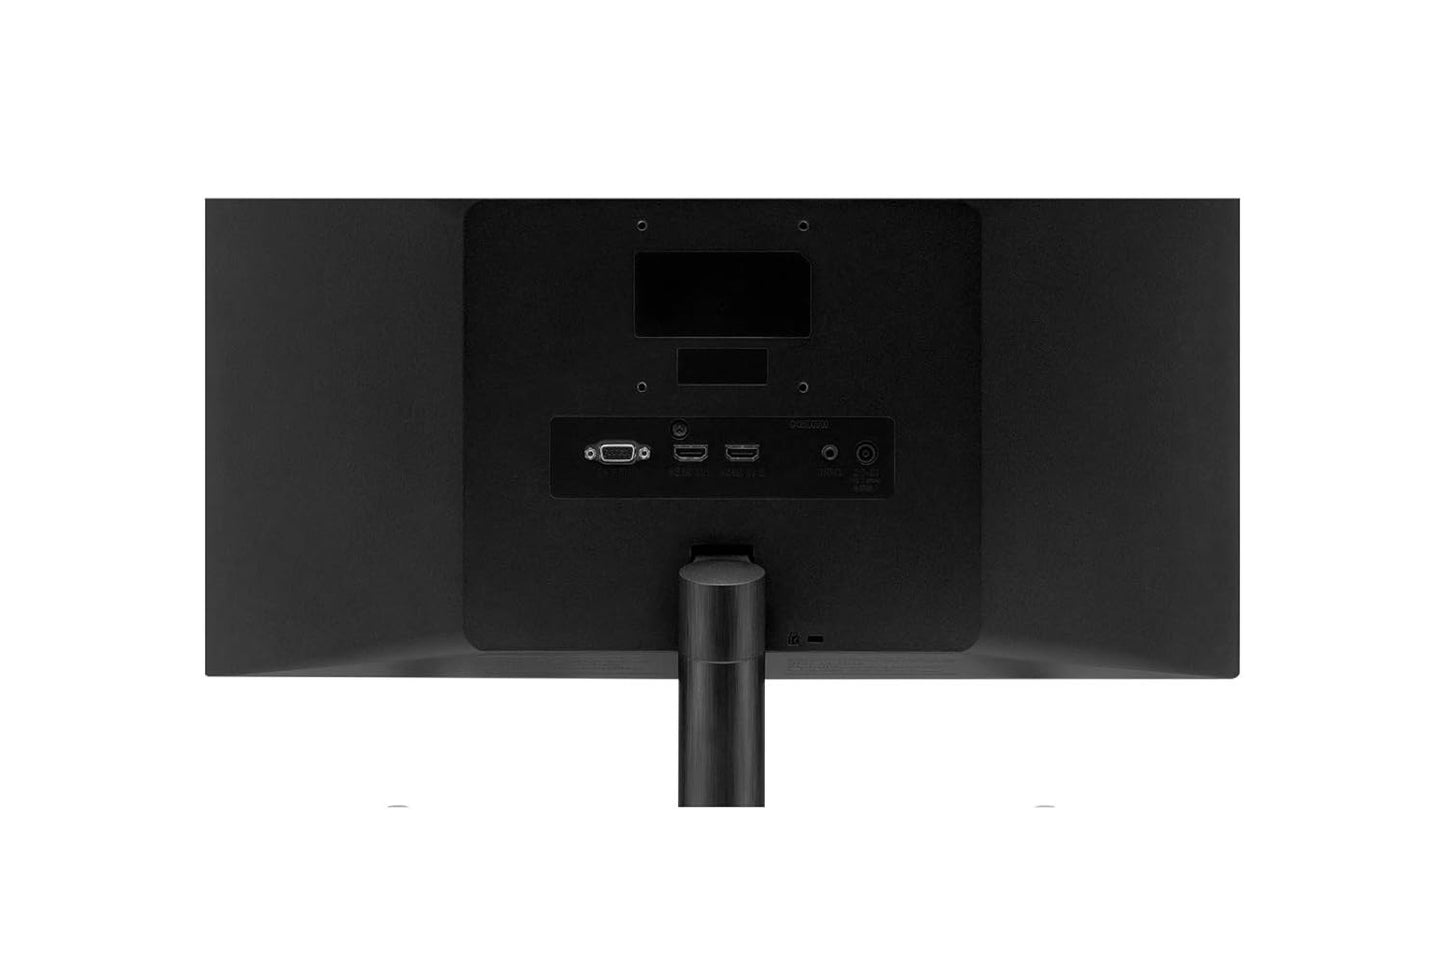 LG 22MK600M-B 22 inch Full HD LED Backlit Slim IPS Panel Monitor